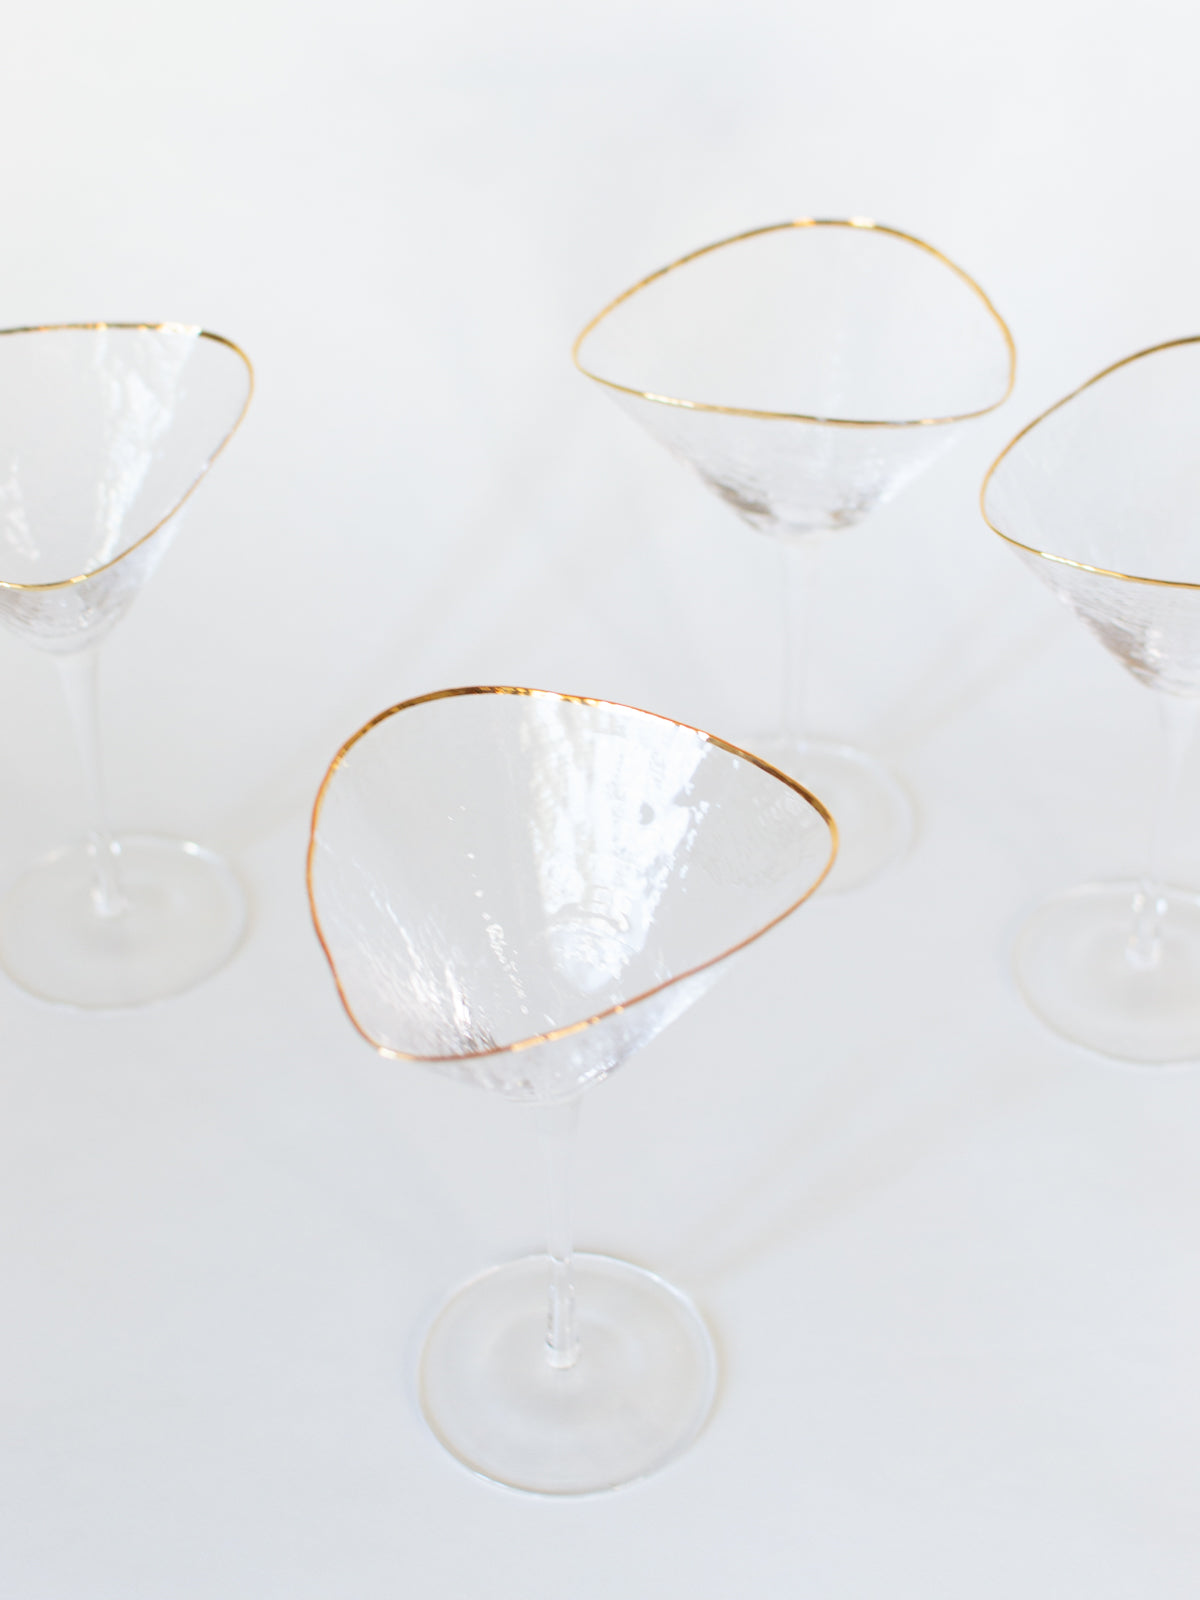 Triangular Gold Rimmed Martini Glass, Set of 4